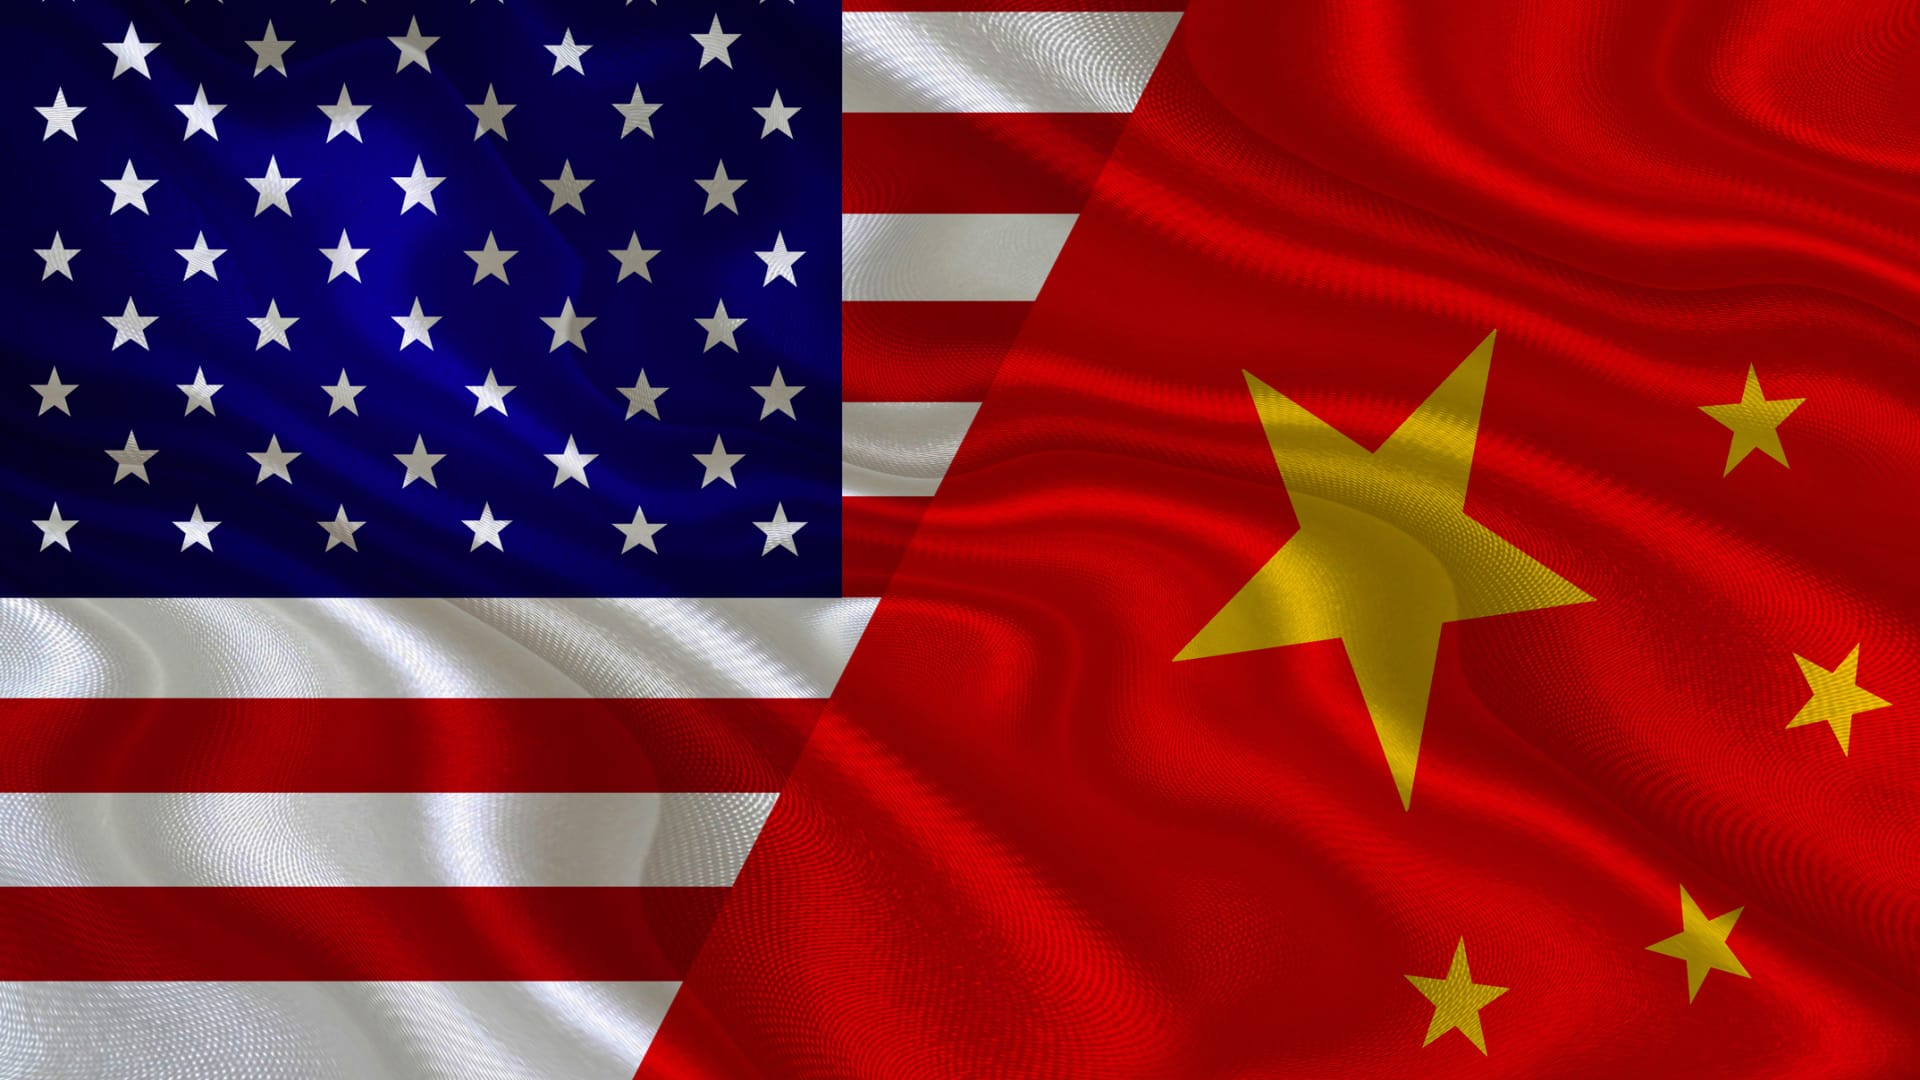 Top China, U.S. officials meet in Malta talks ahead of possible Xi-Biden meeting